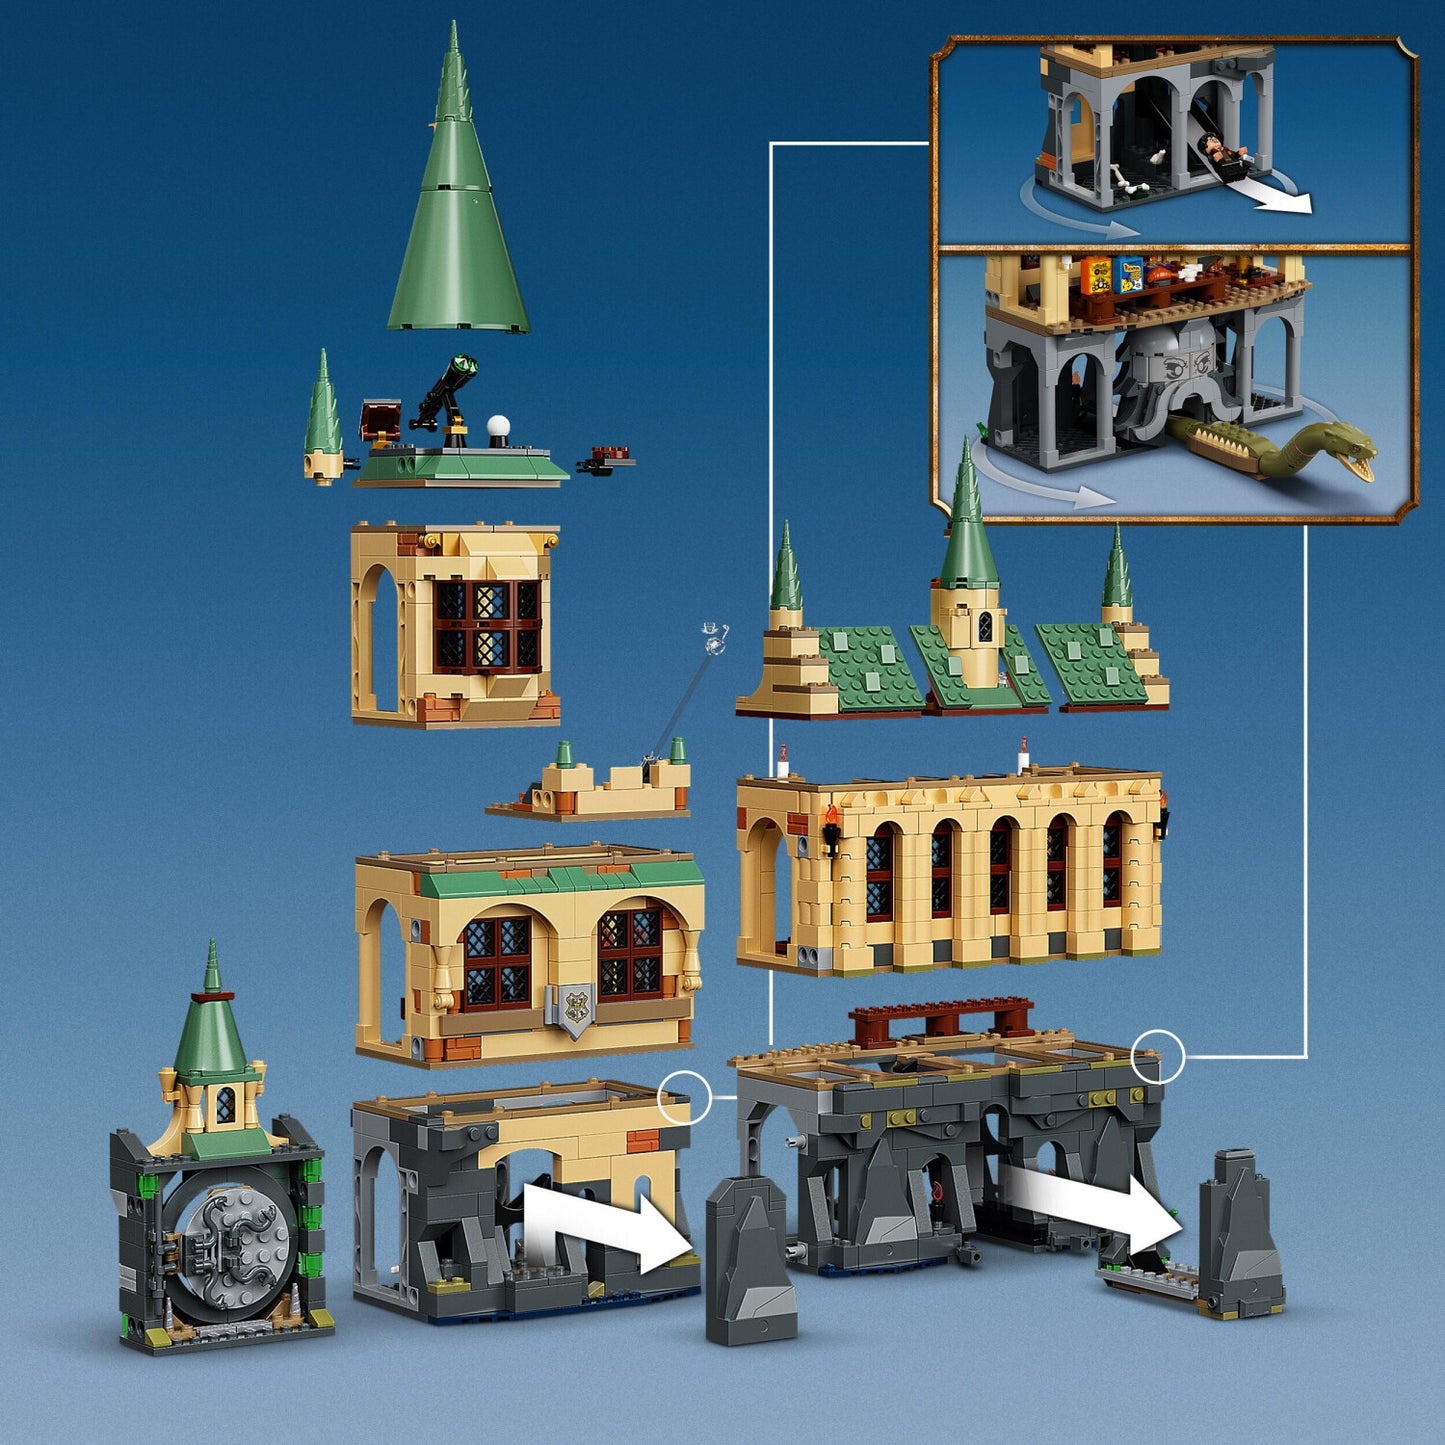 LEGO 76389 Harry Potter Hogwarts Kammer des Schreckens